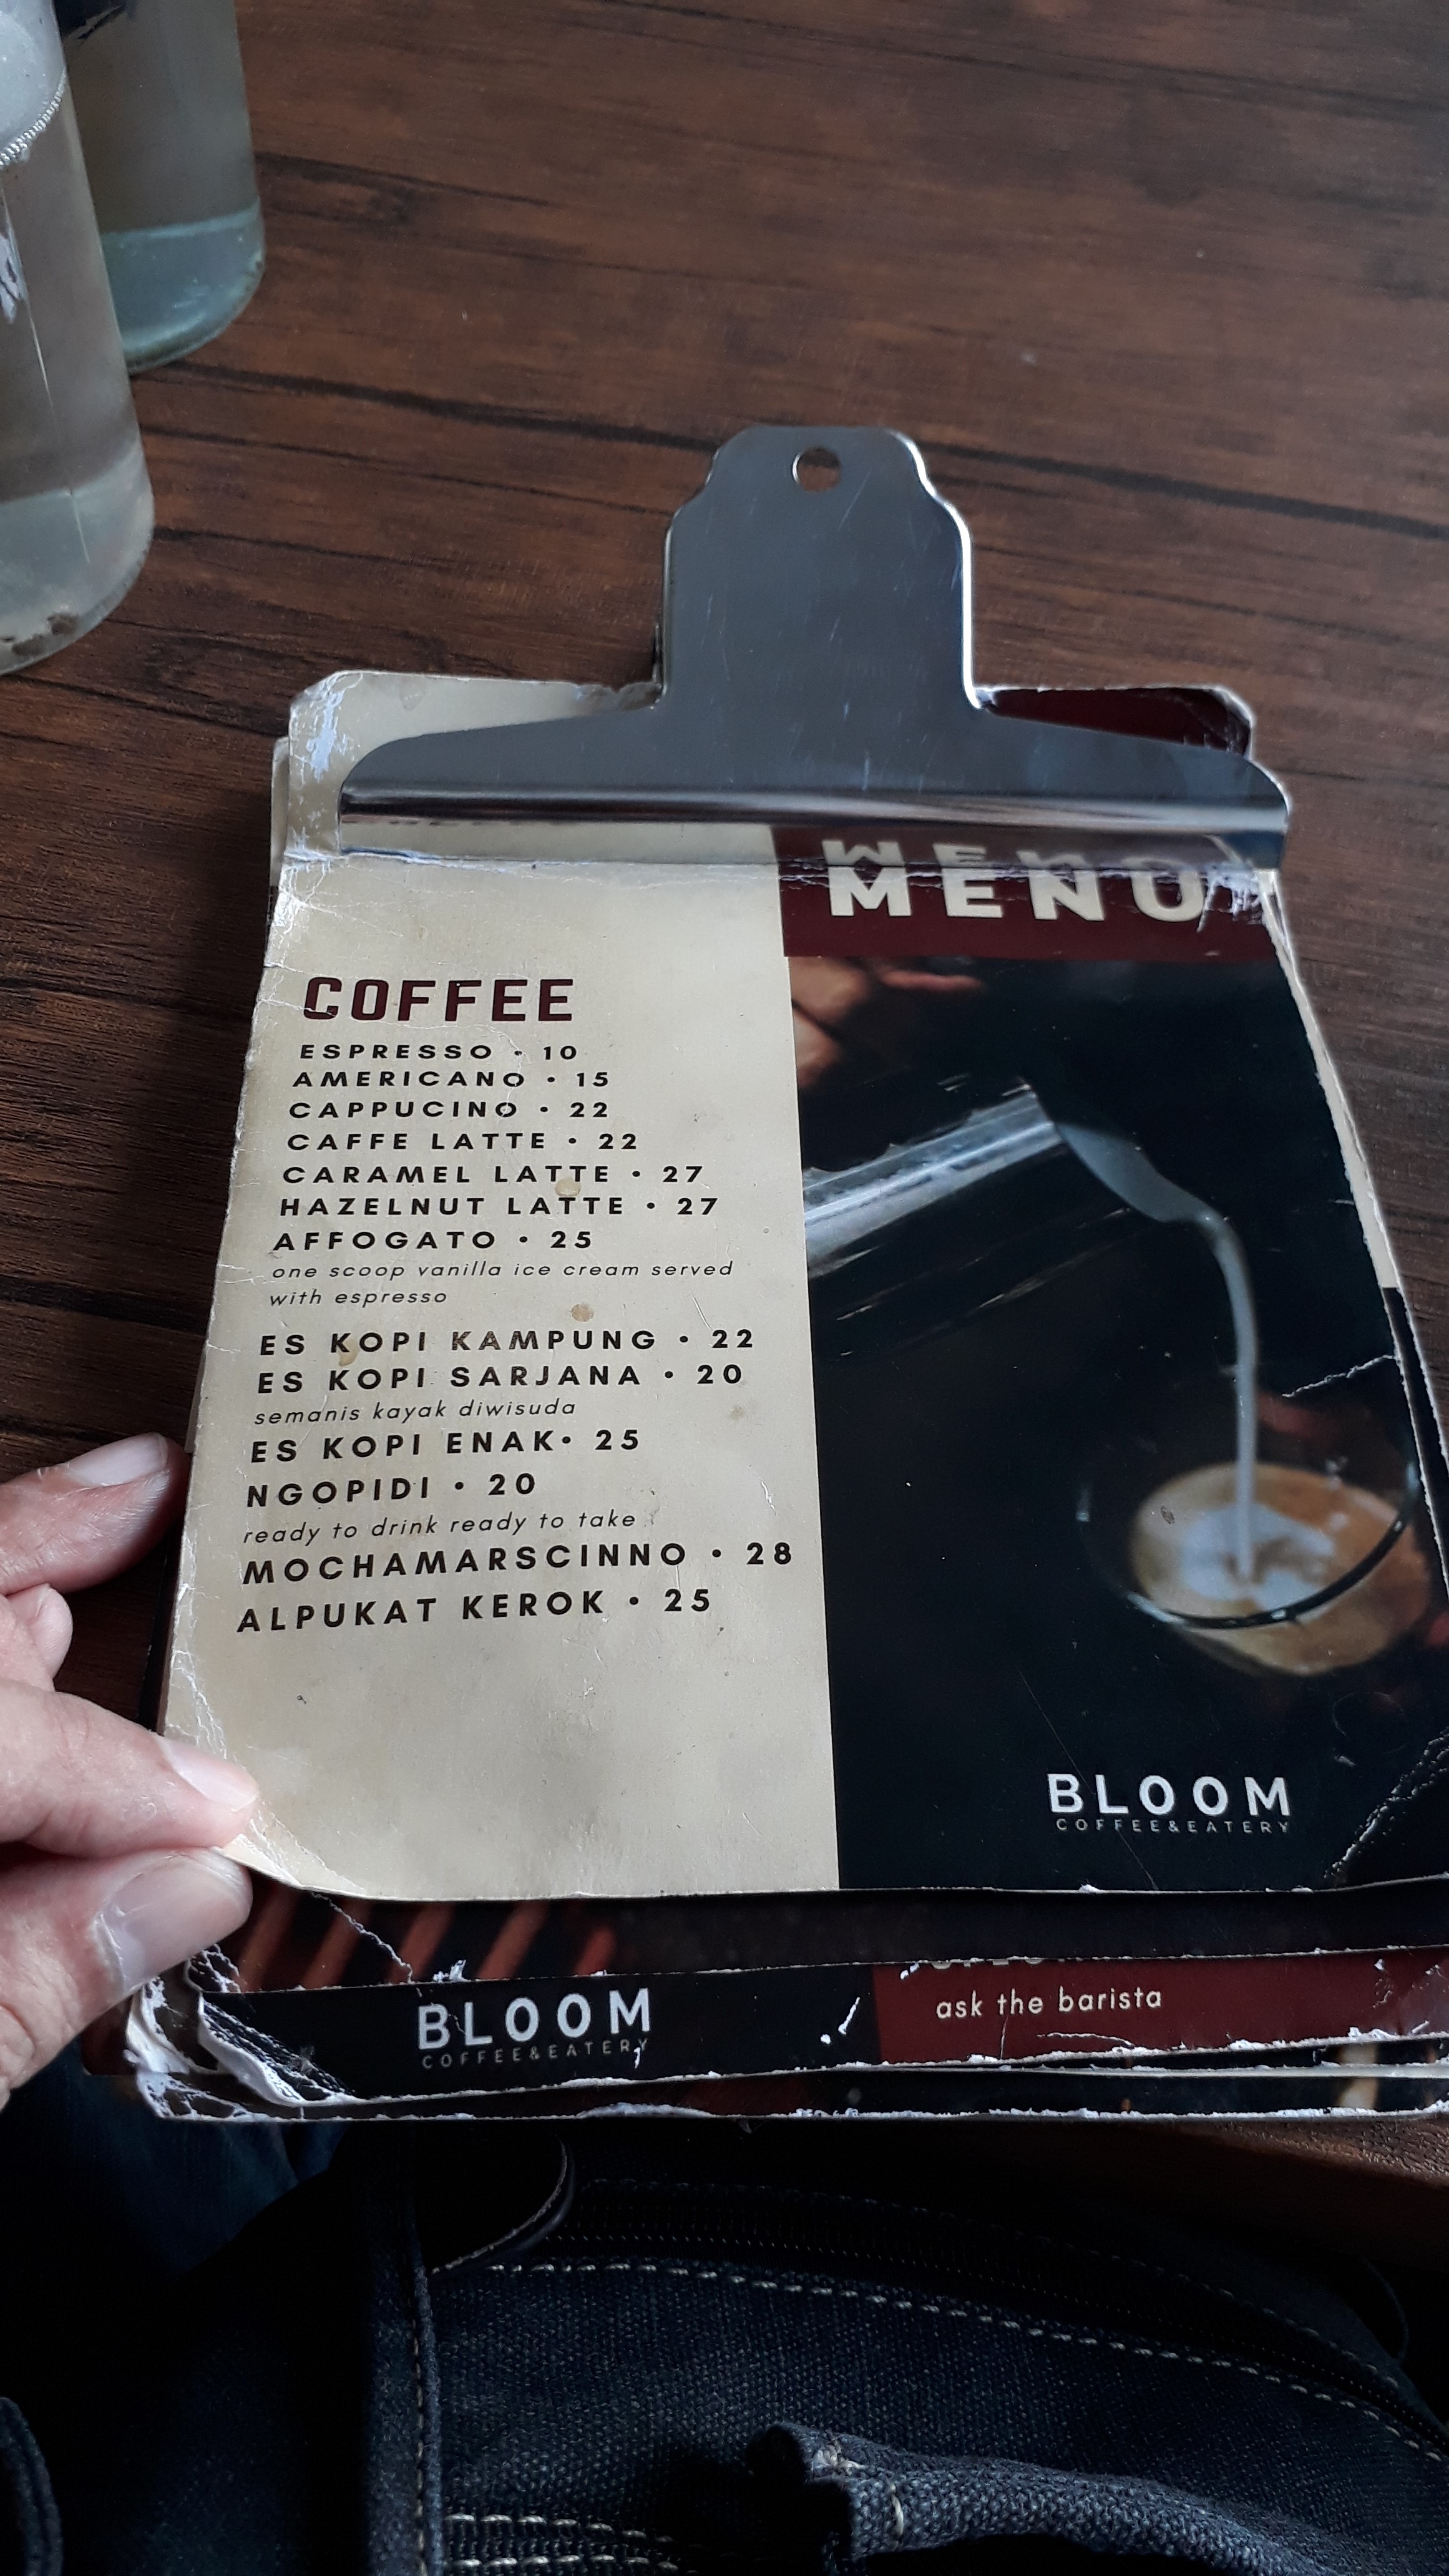 Daftar Menu Bloom Coffee & Eatery Lengkap Makanan dan Minuman